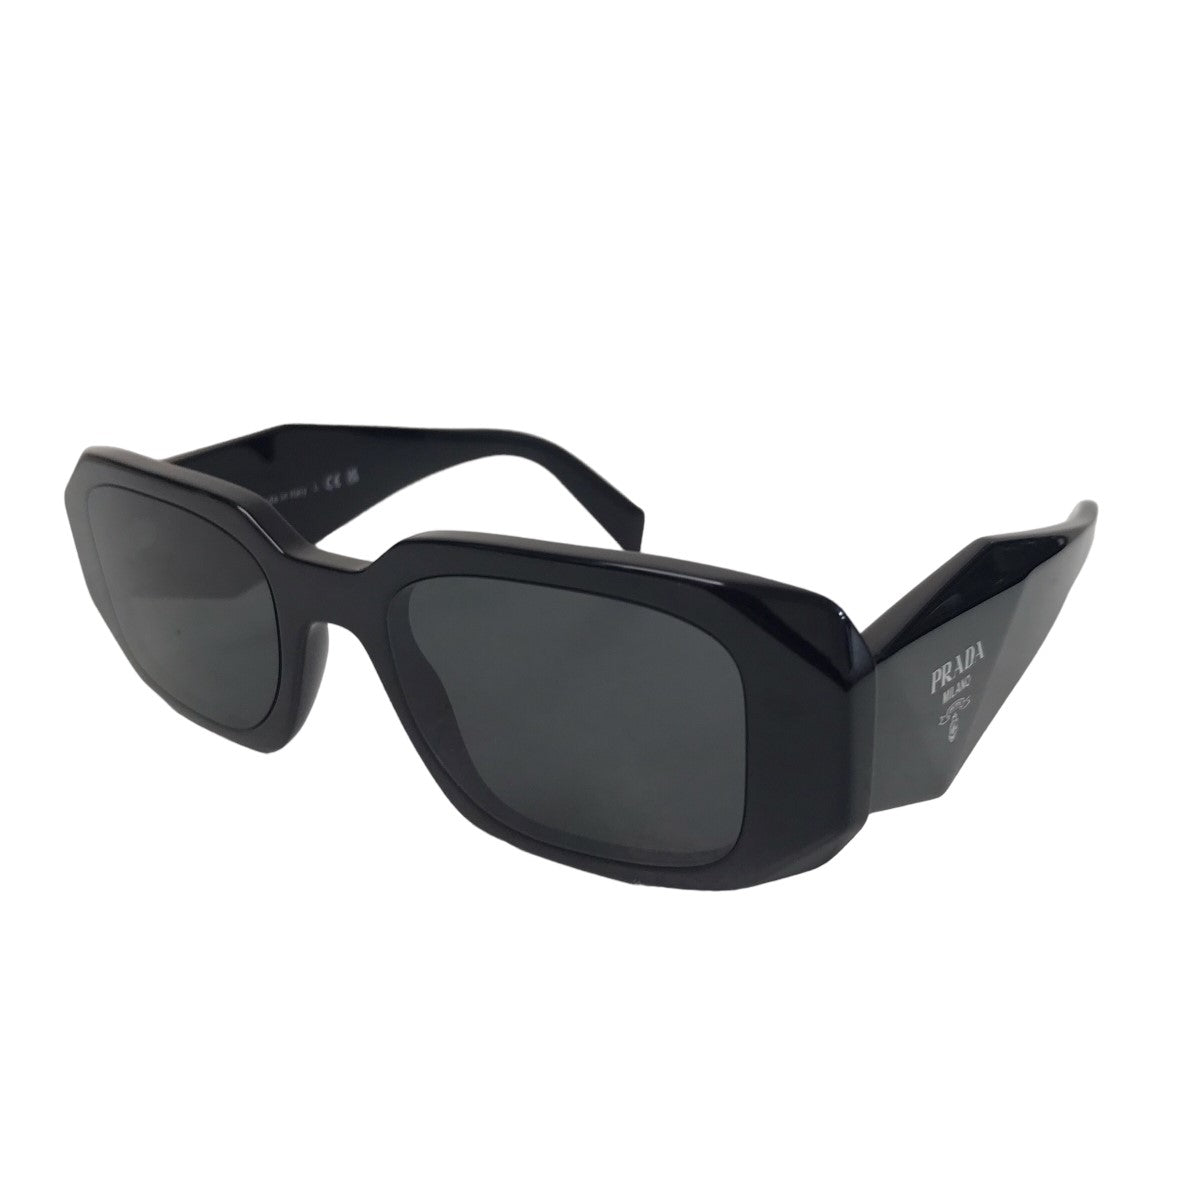 PRADA(プラダ) 「Sunglasses」サングラス SPR-17W 1AB-5S0 ブラック ...